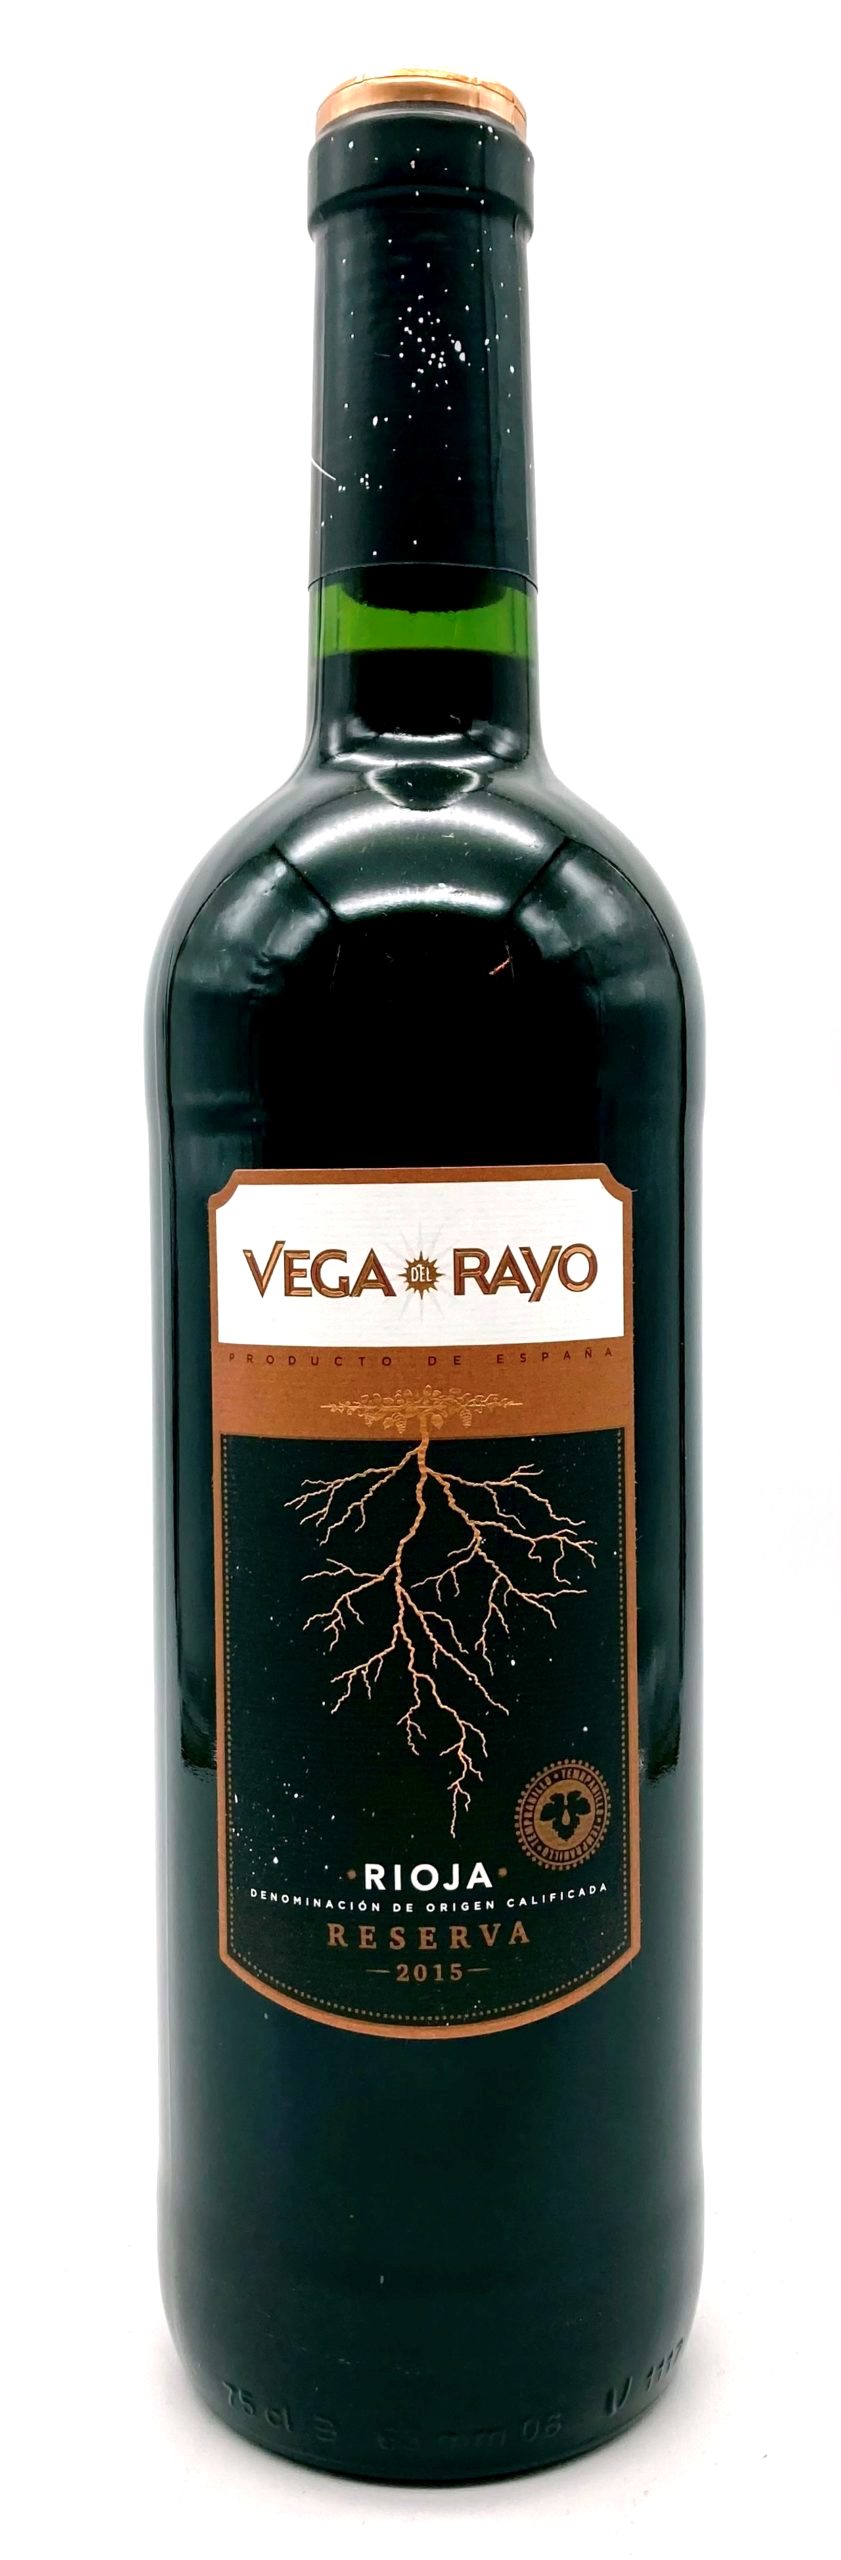 Rioja Vega del Rayo Reserva 2015, Edinburgh, Scotland